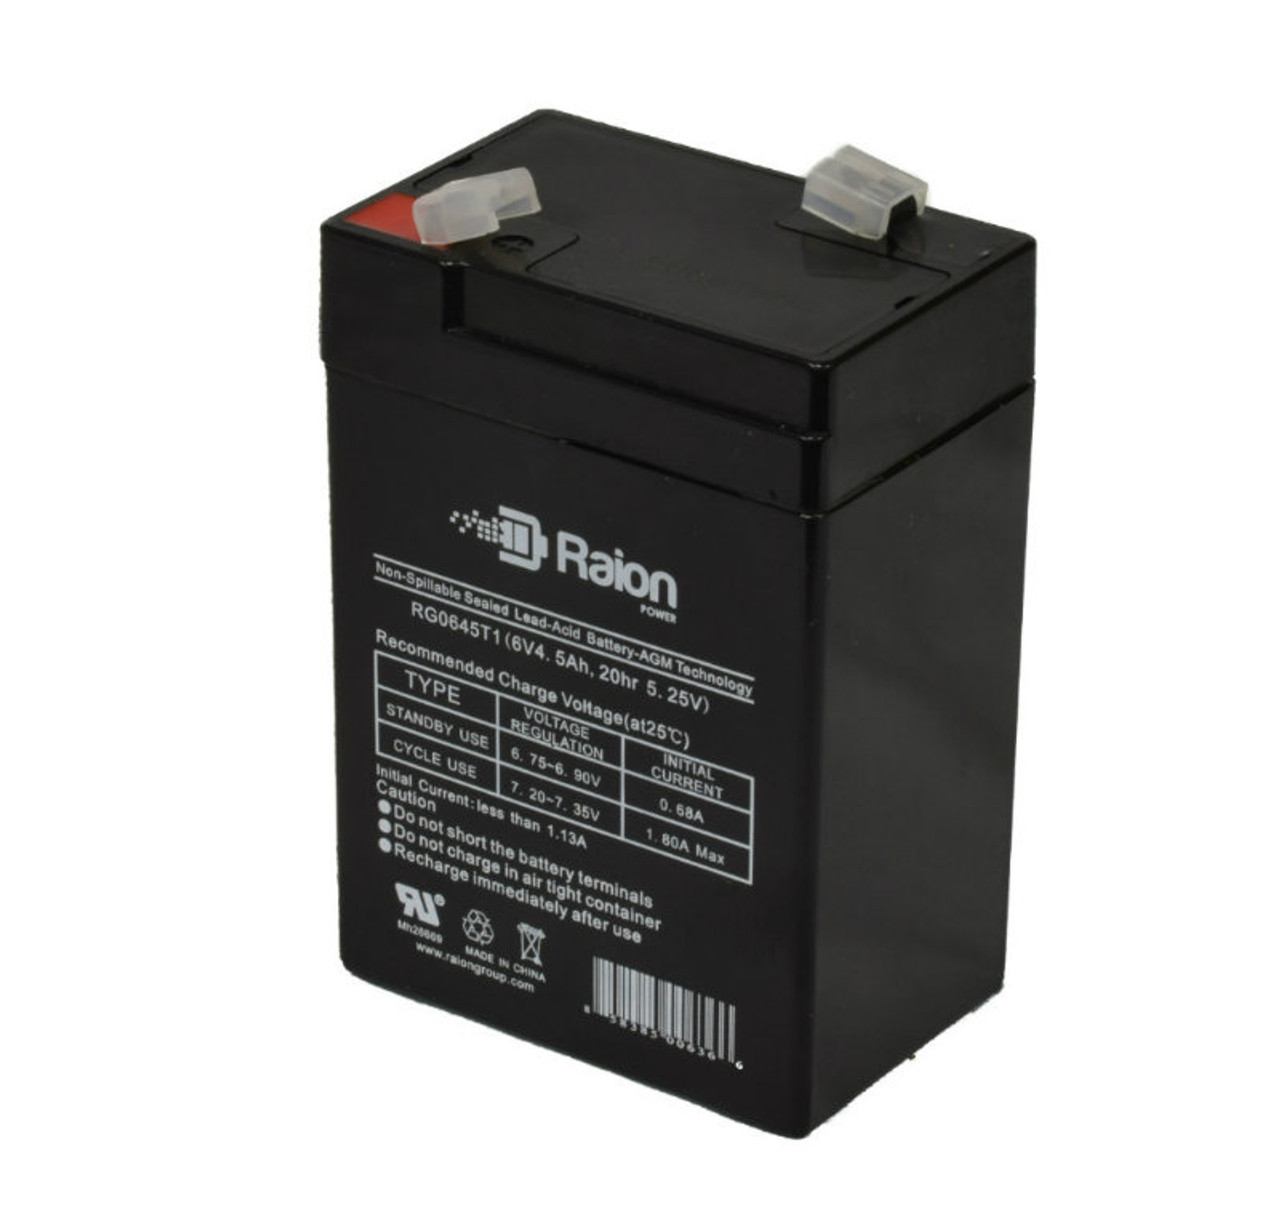 Raion Power RG0645T1 6V 4.5Ah Replacement Battery Cartridge for Nellcor Puritan Bennett N-600x Oximax Pulse Oximeter